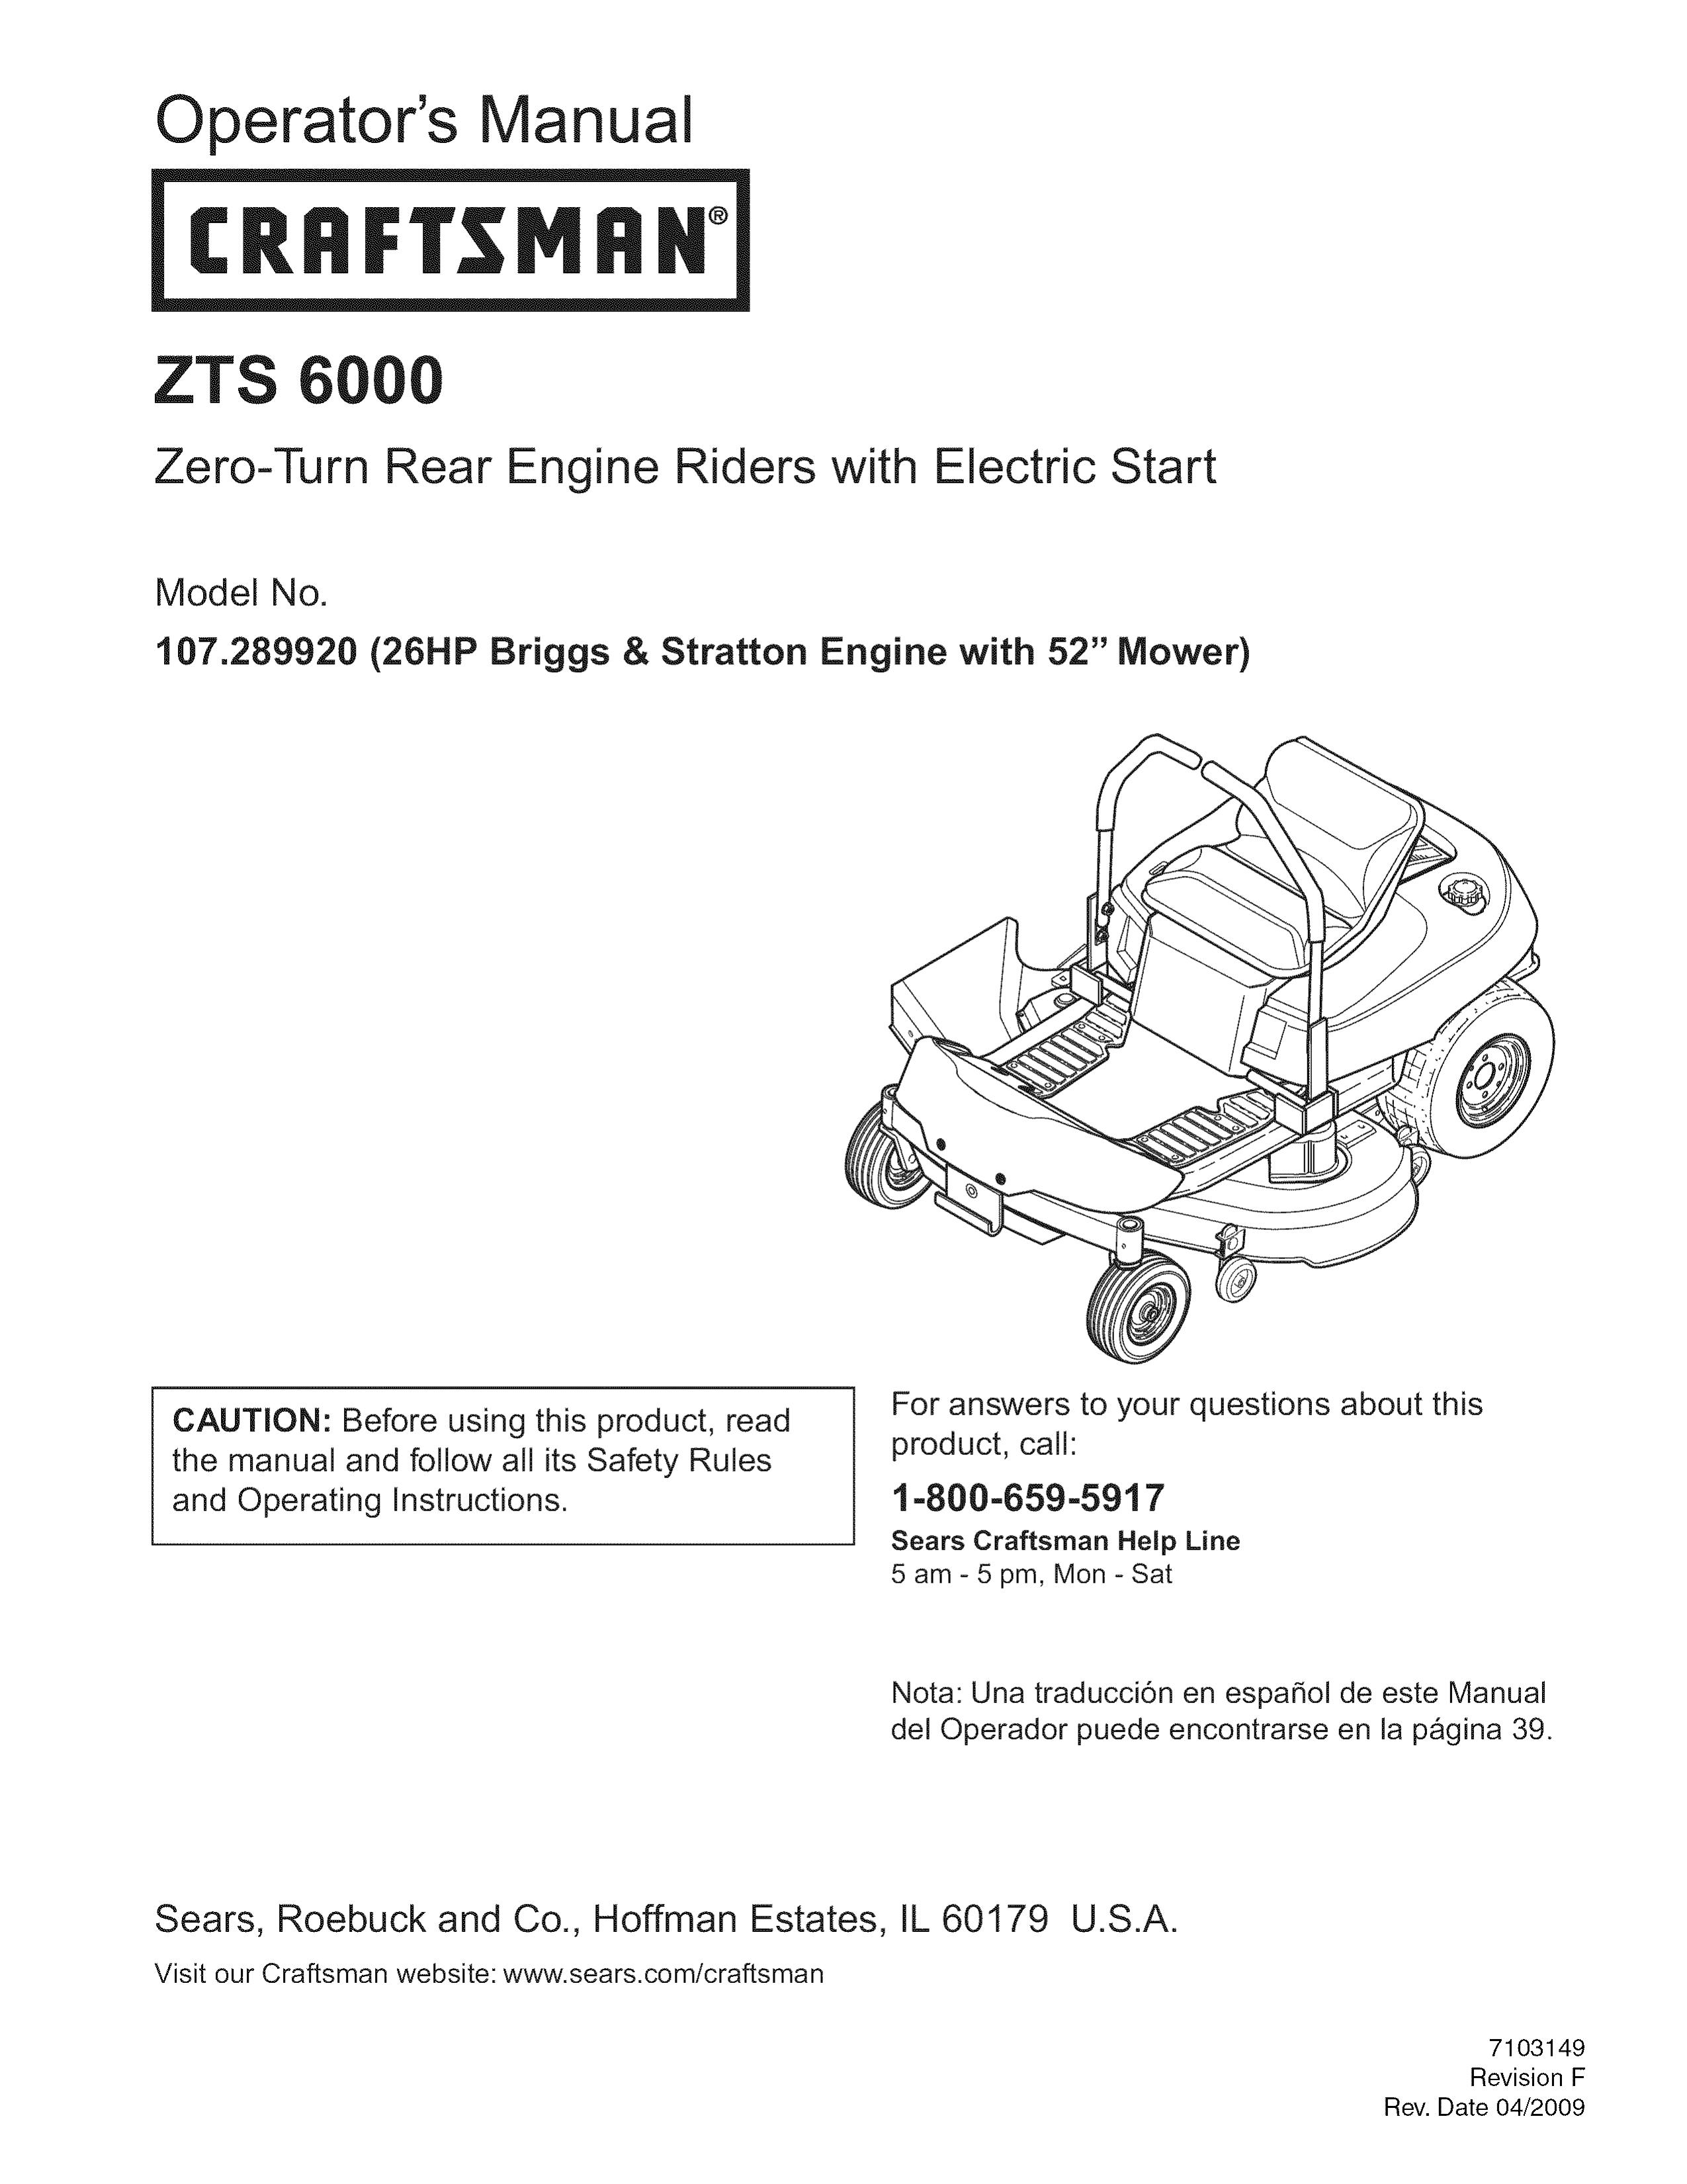 Craftsman 107.289920 Lawn Mower User Manual